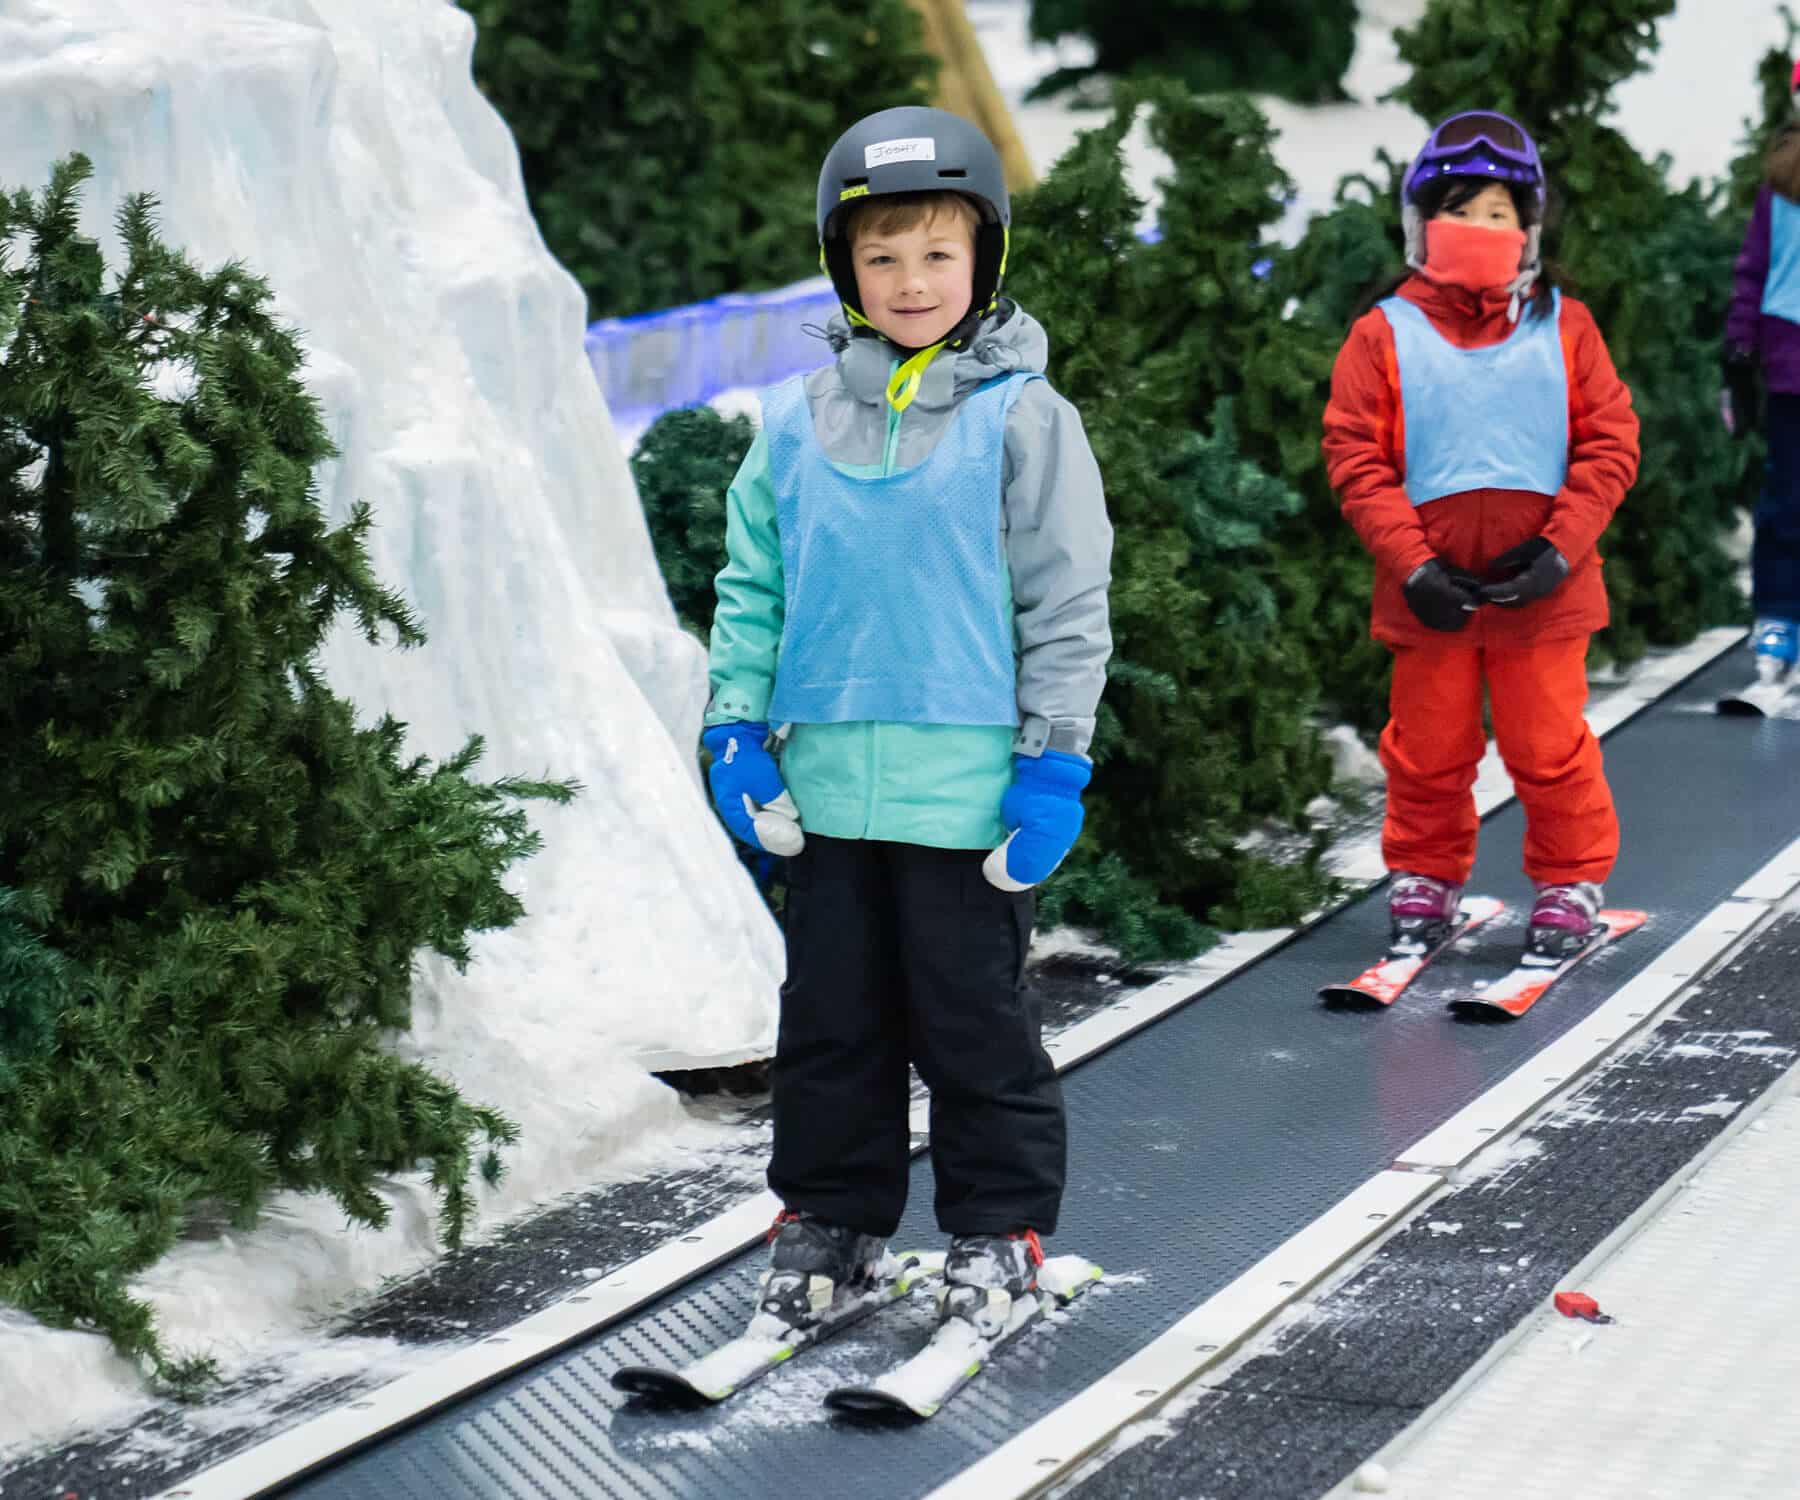 Family fun skiing at Snowplanet